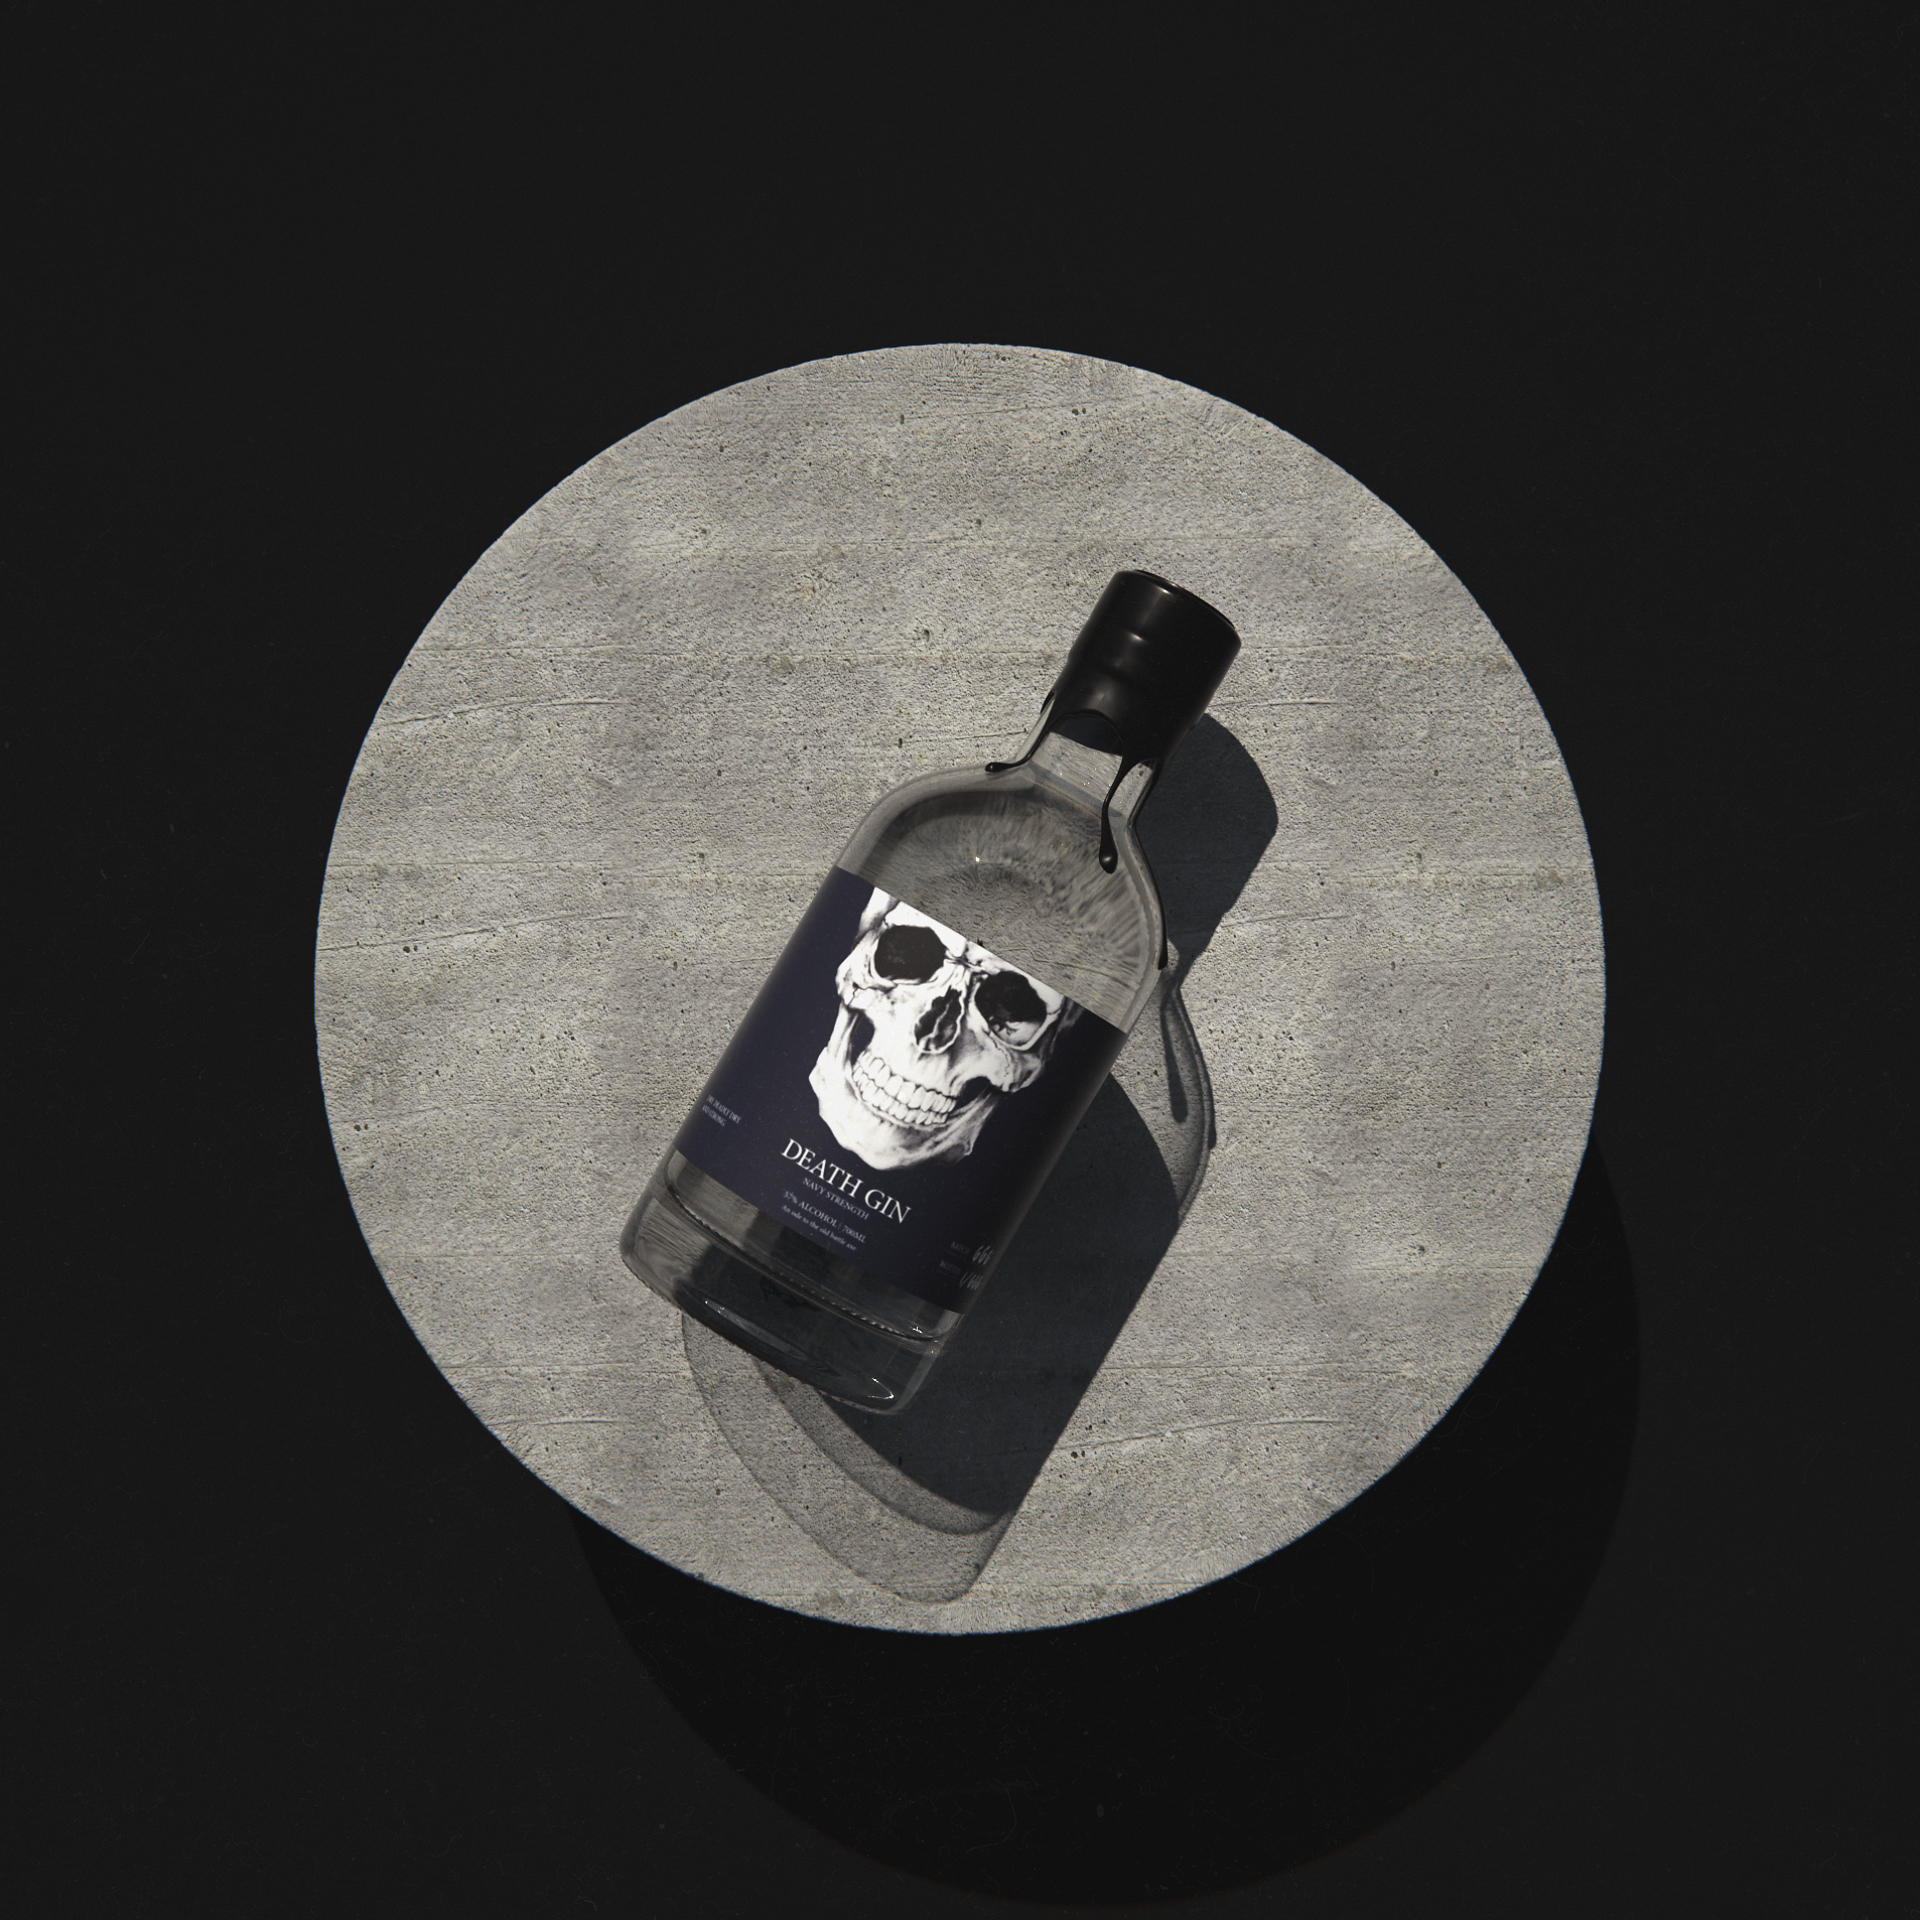 Navy - Death gin 3D product visualization - Sonny Nguyen